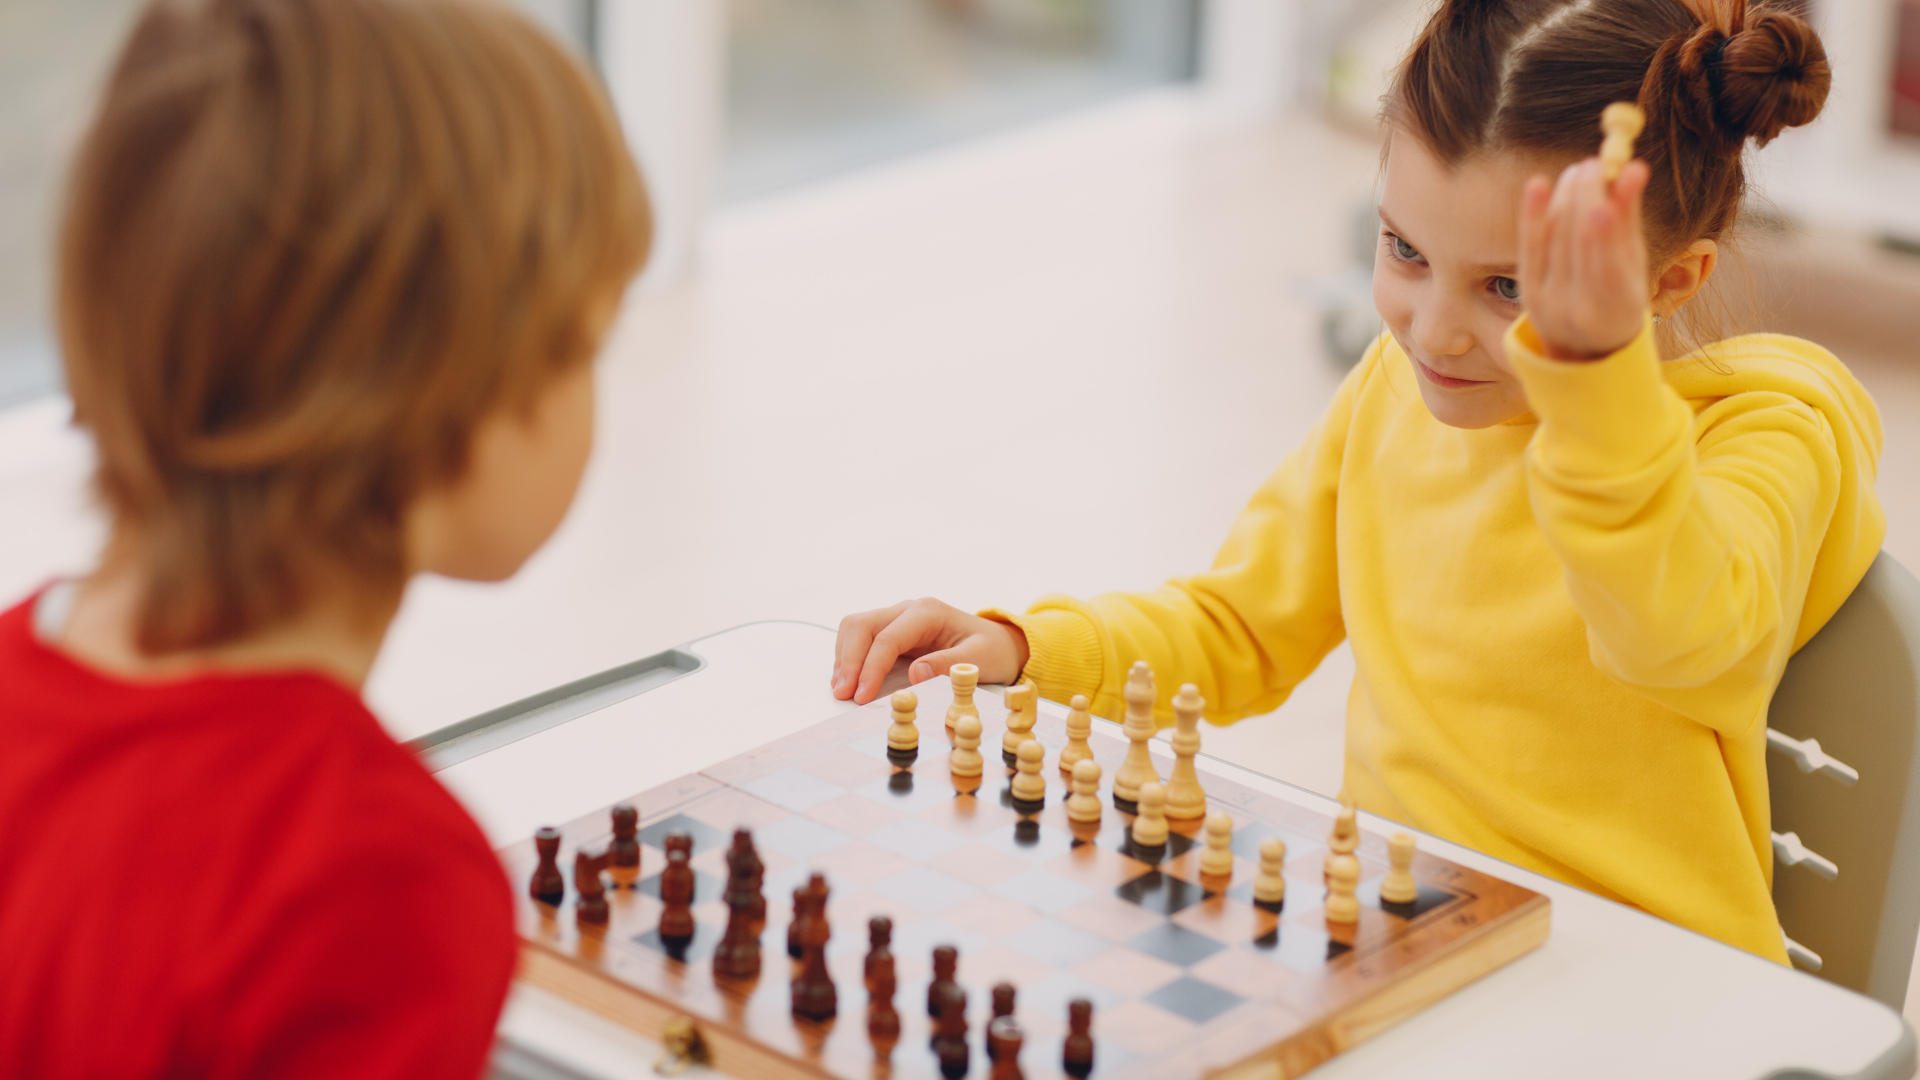 Inscripción a clases online de ajedrez – Tu Profe de Ajedrez